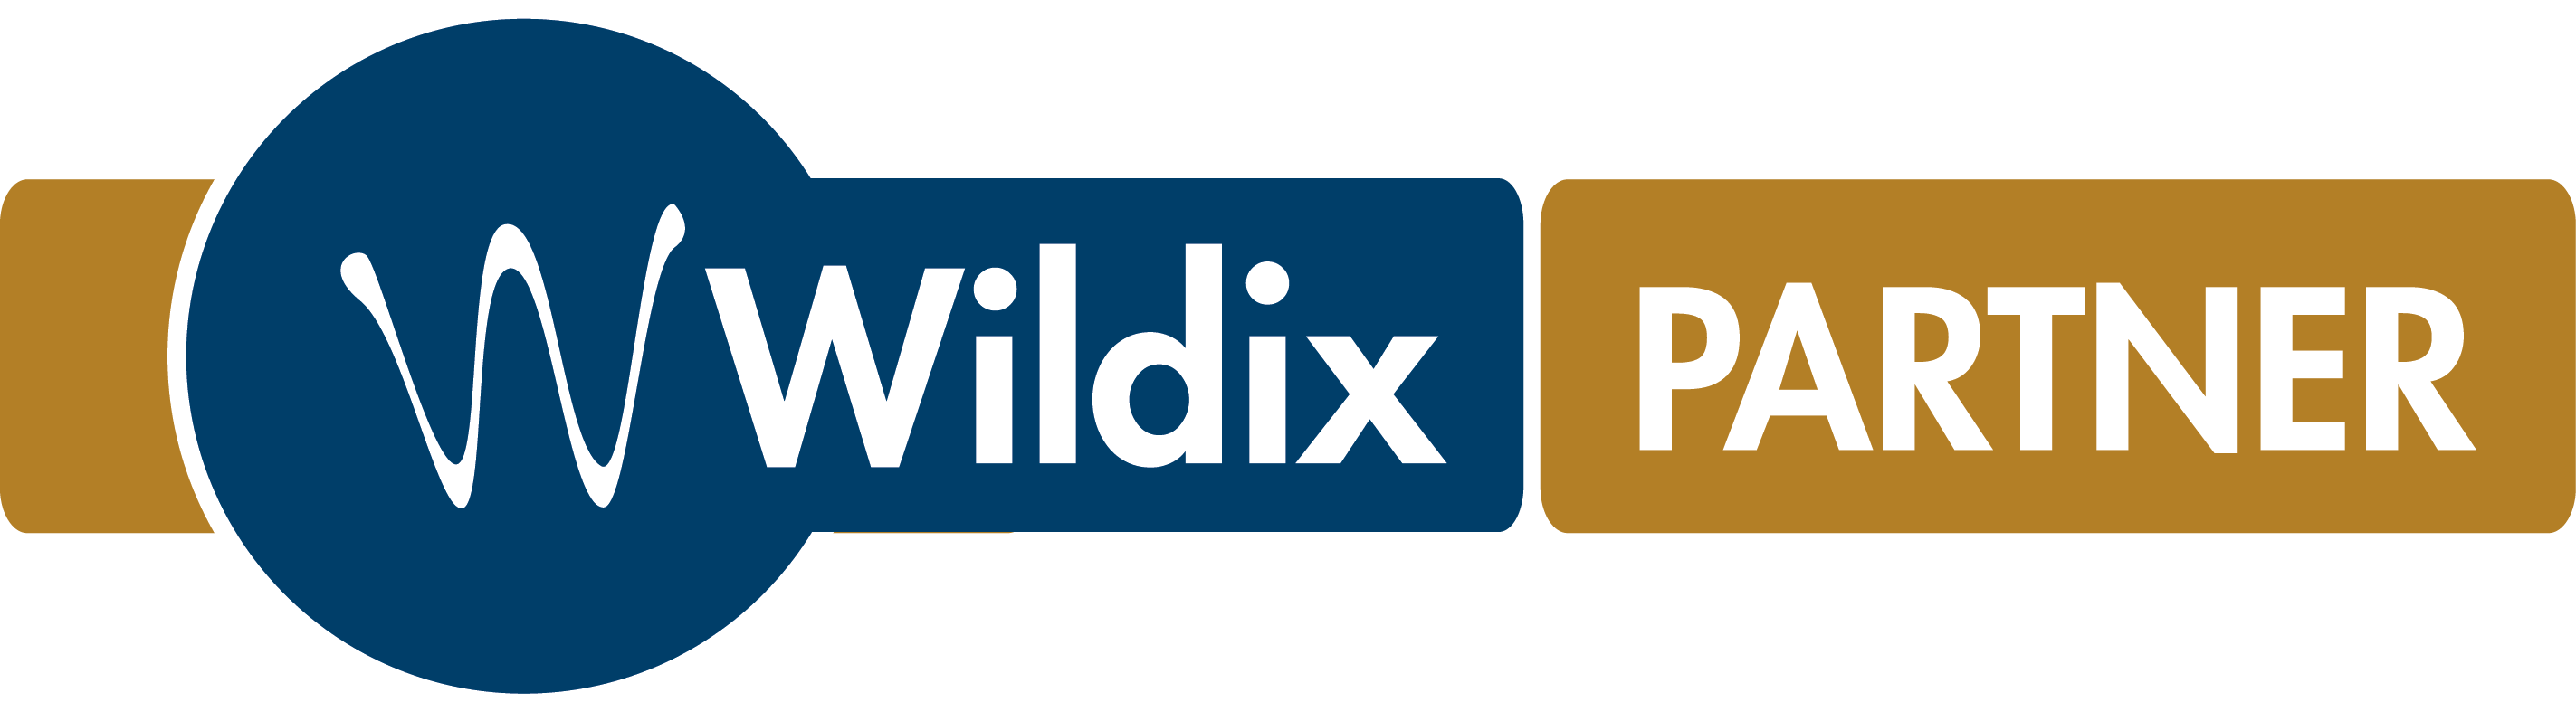 Logo-Wildix-Partner.png